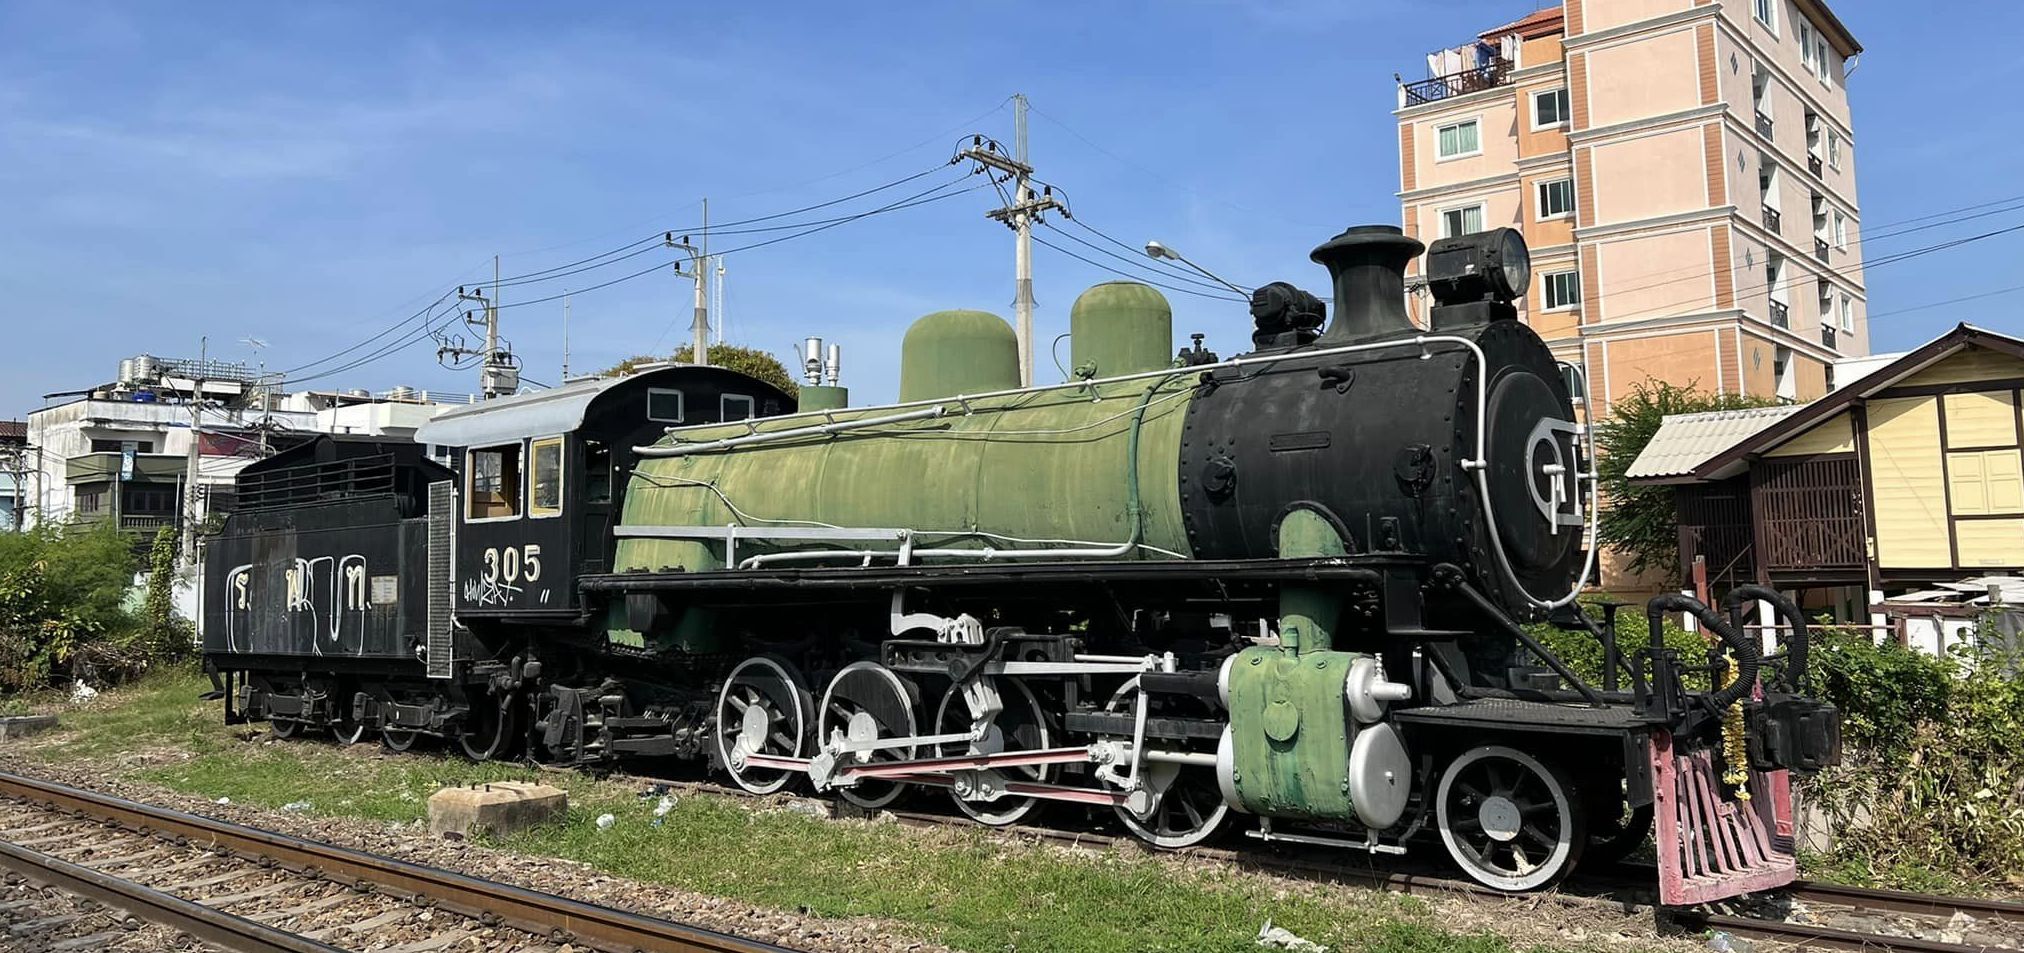 Old steam locomotive at Hua Hin